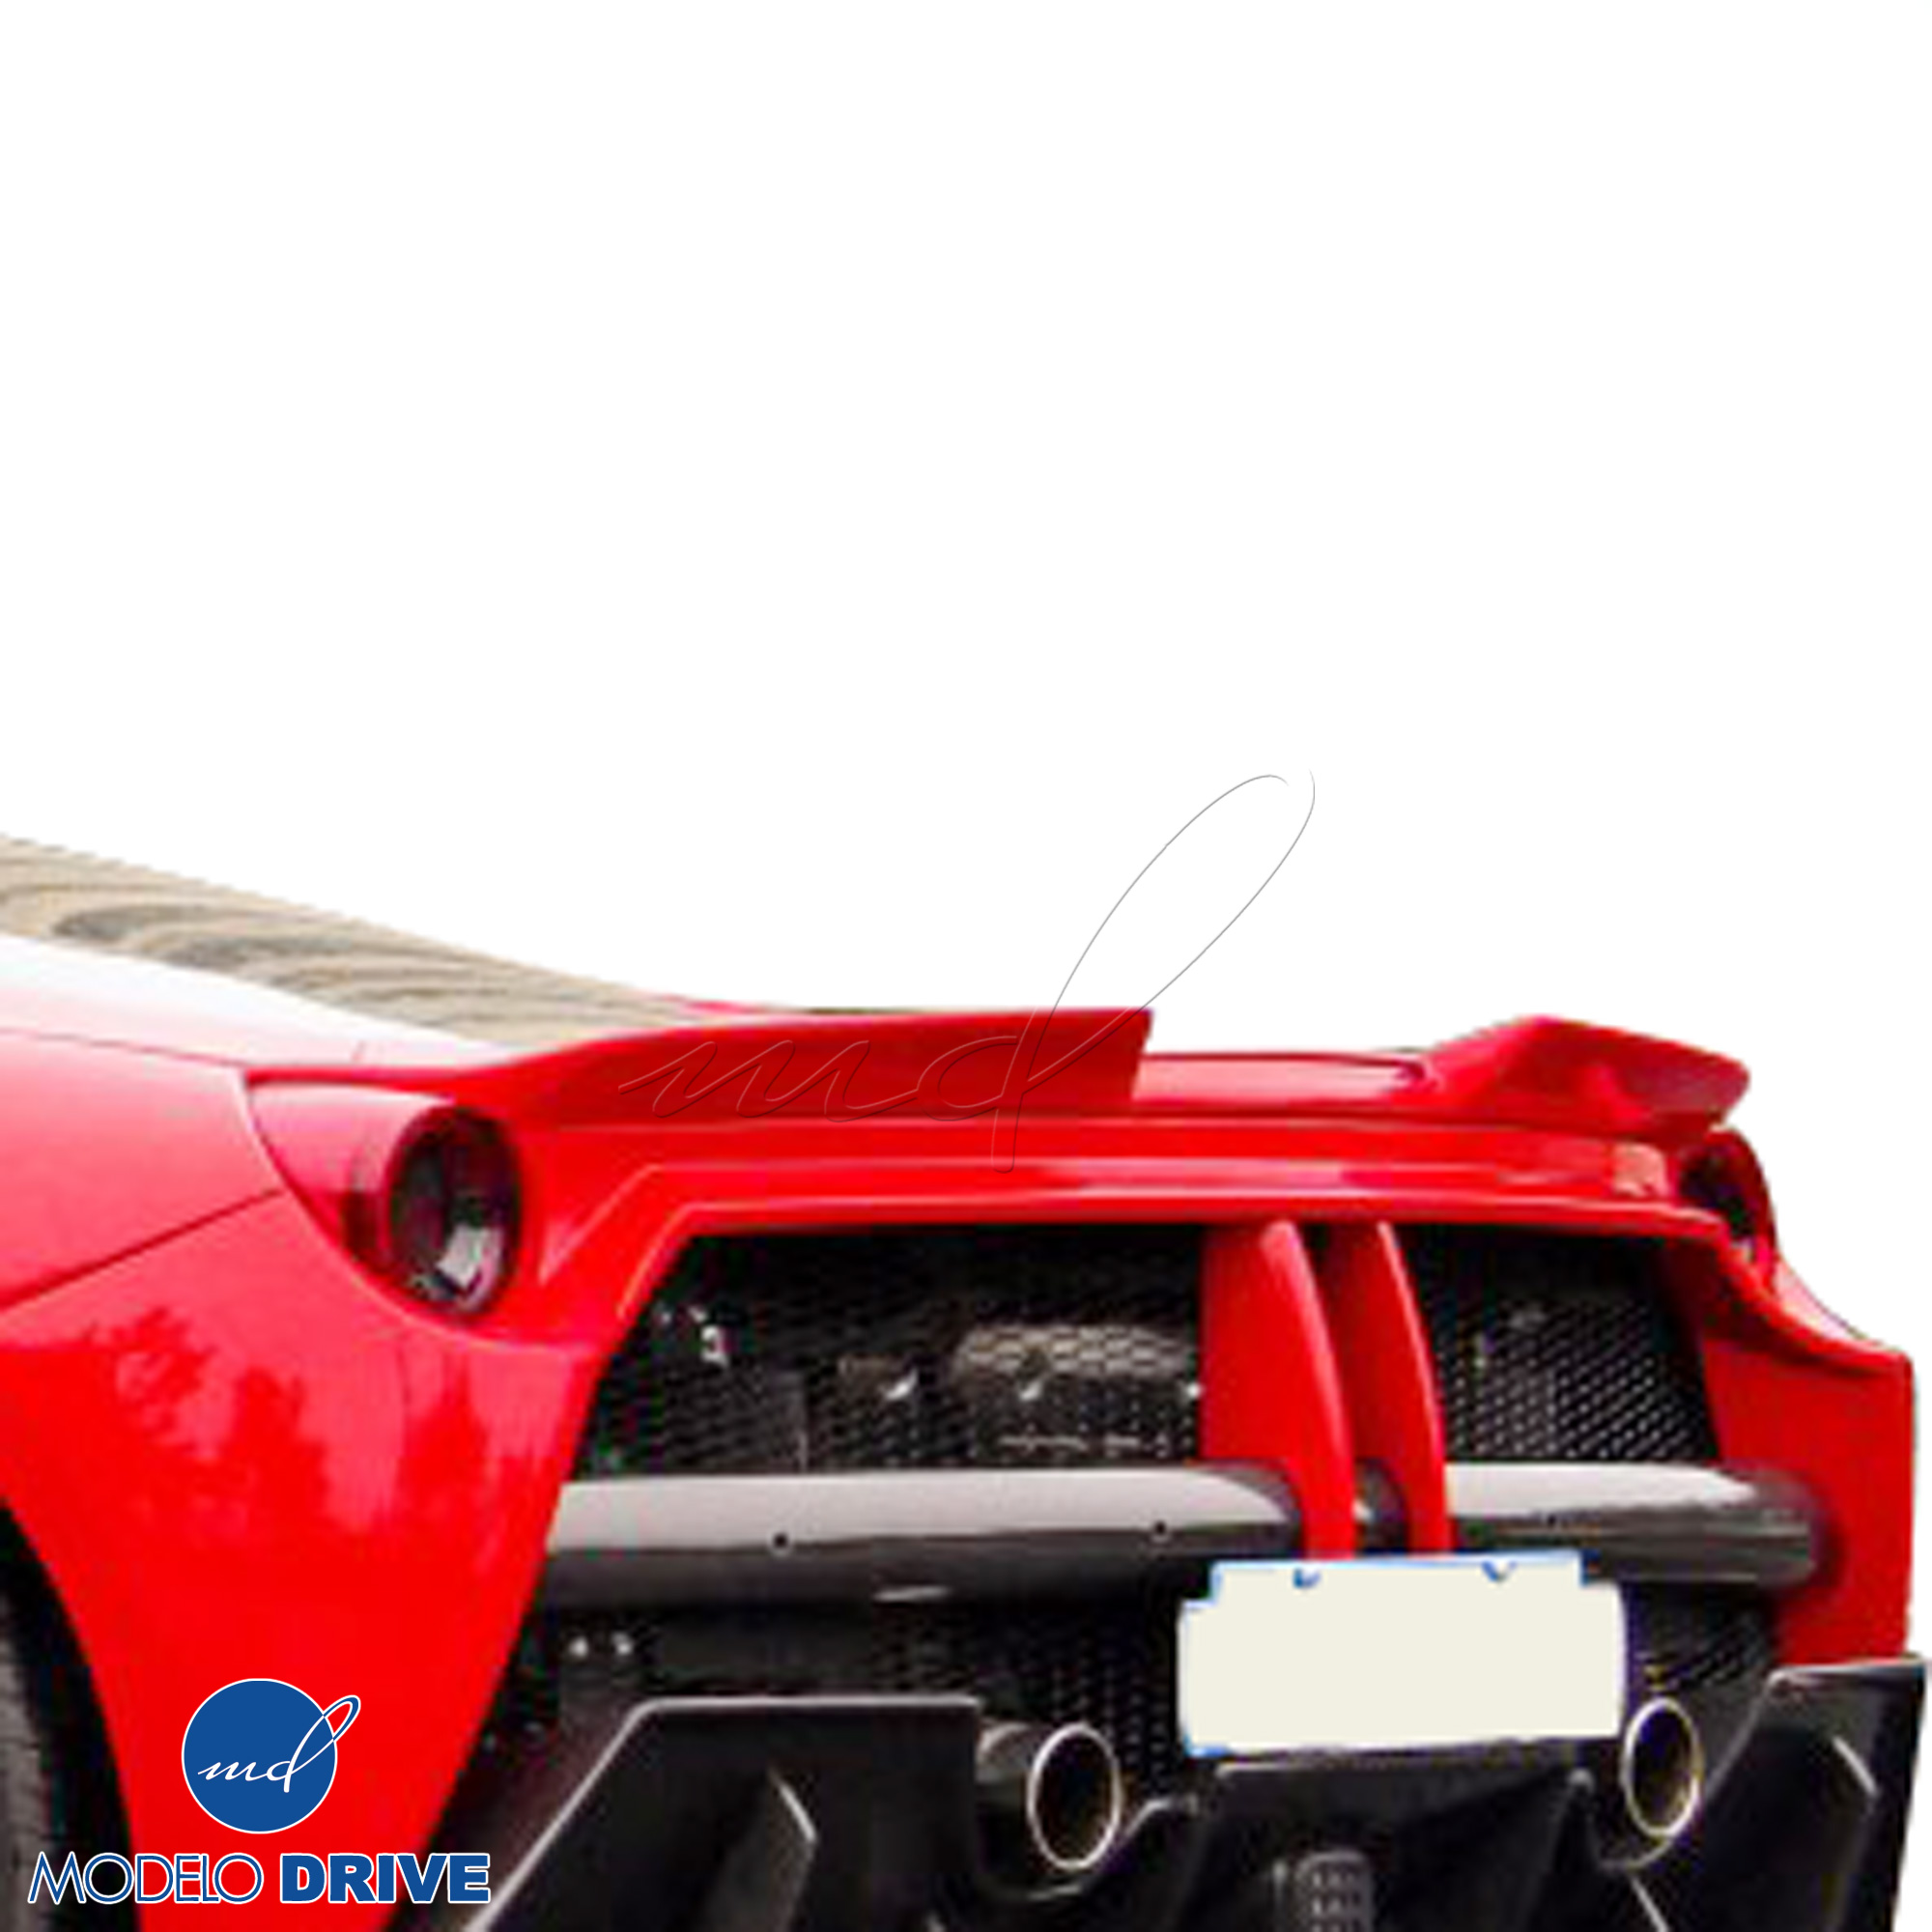 ModeloDrive FRP MDES Spoiler Wing > Ferrari 488 GTB F142M 2016-2019 - Image 2